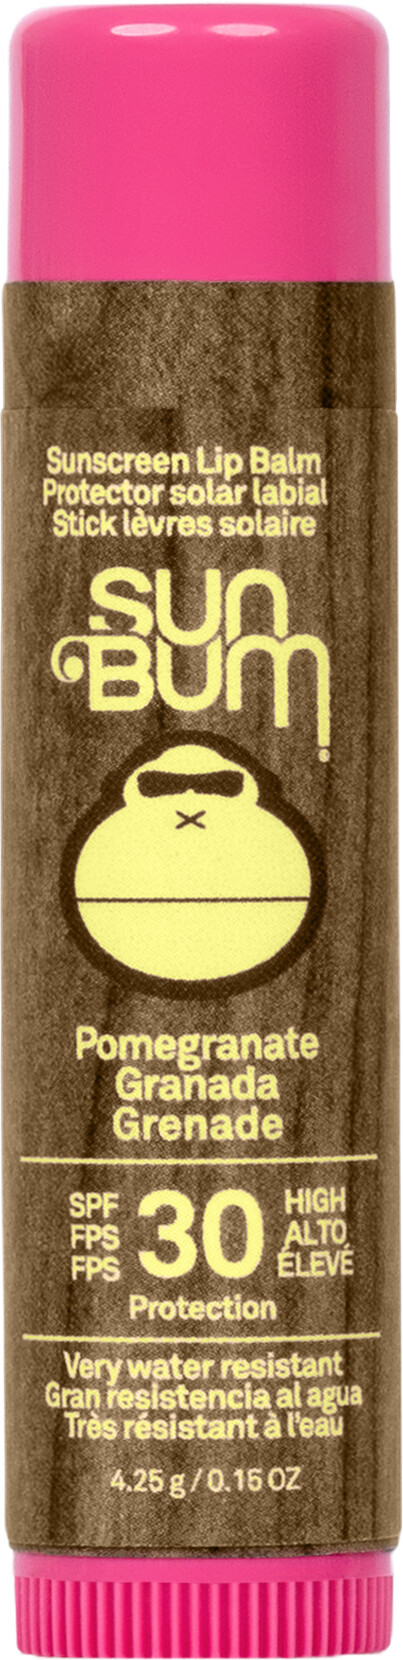 Sun Bum Original Lip Balm SPF30 4.25g Pomegranate